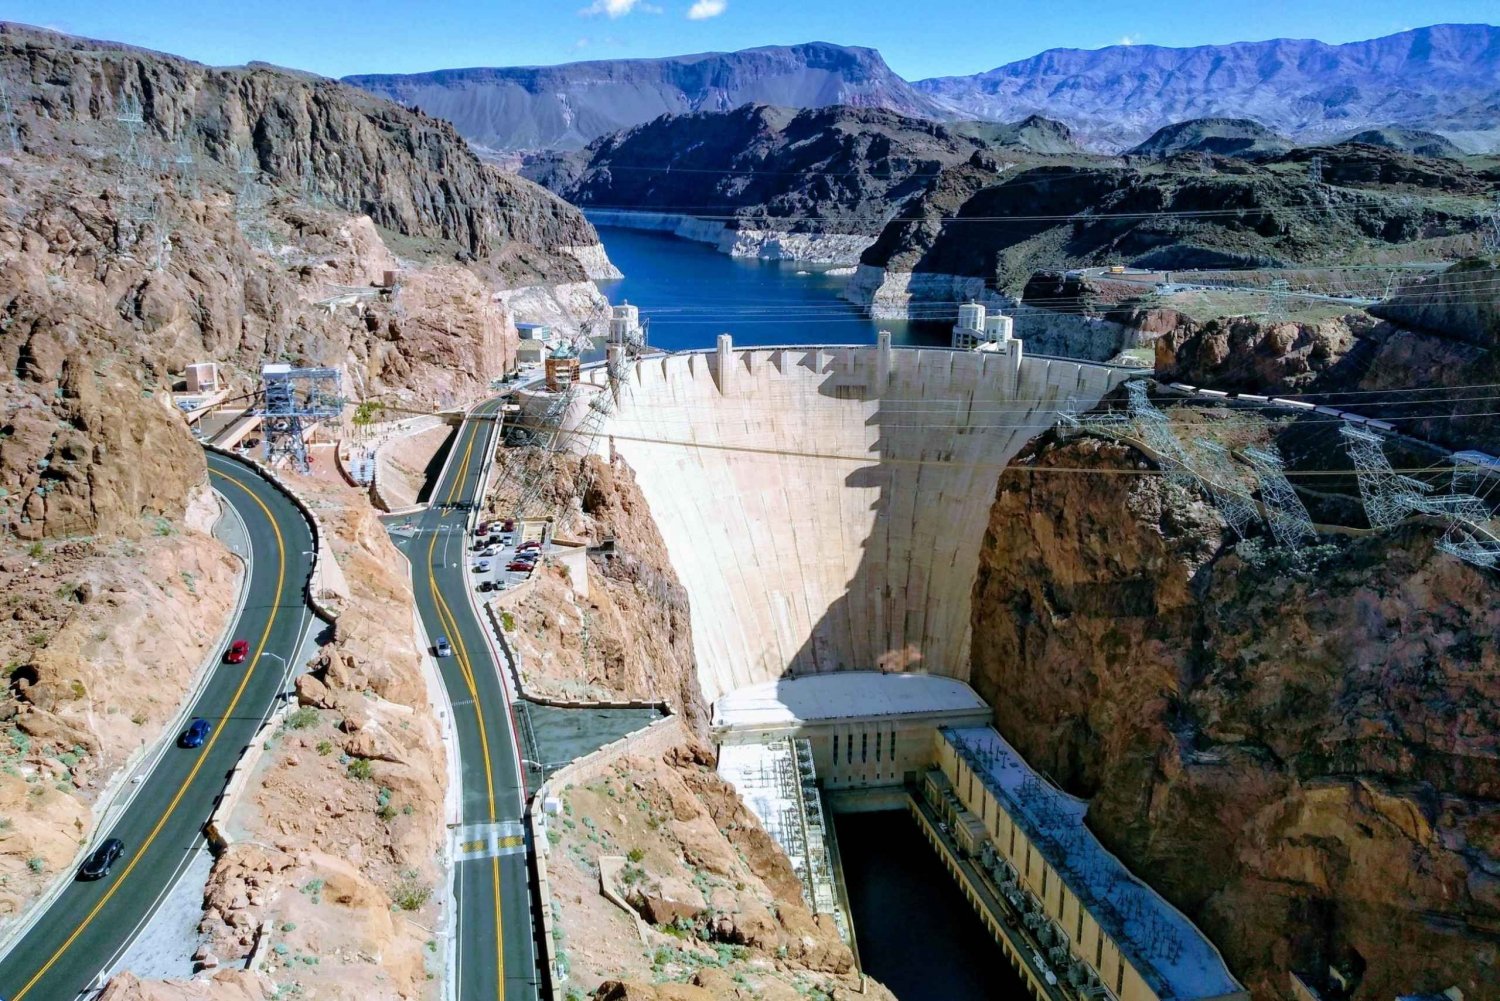 Las Vegasista: Hoover Dam Exploration Tour